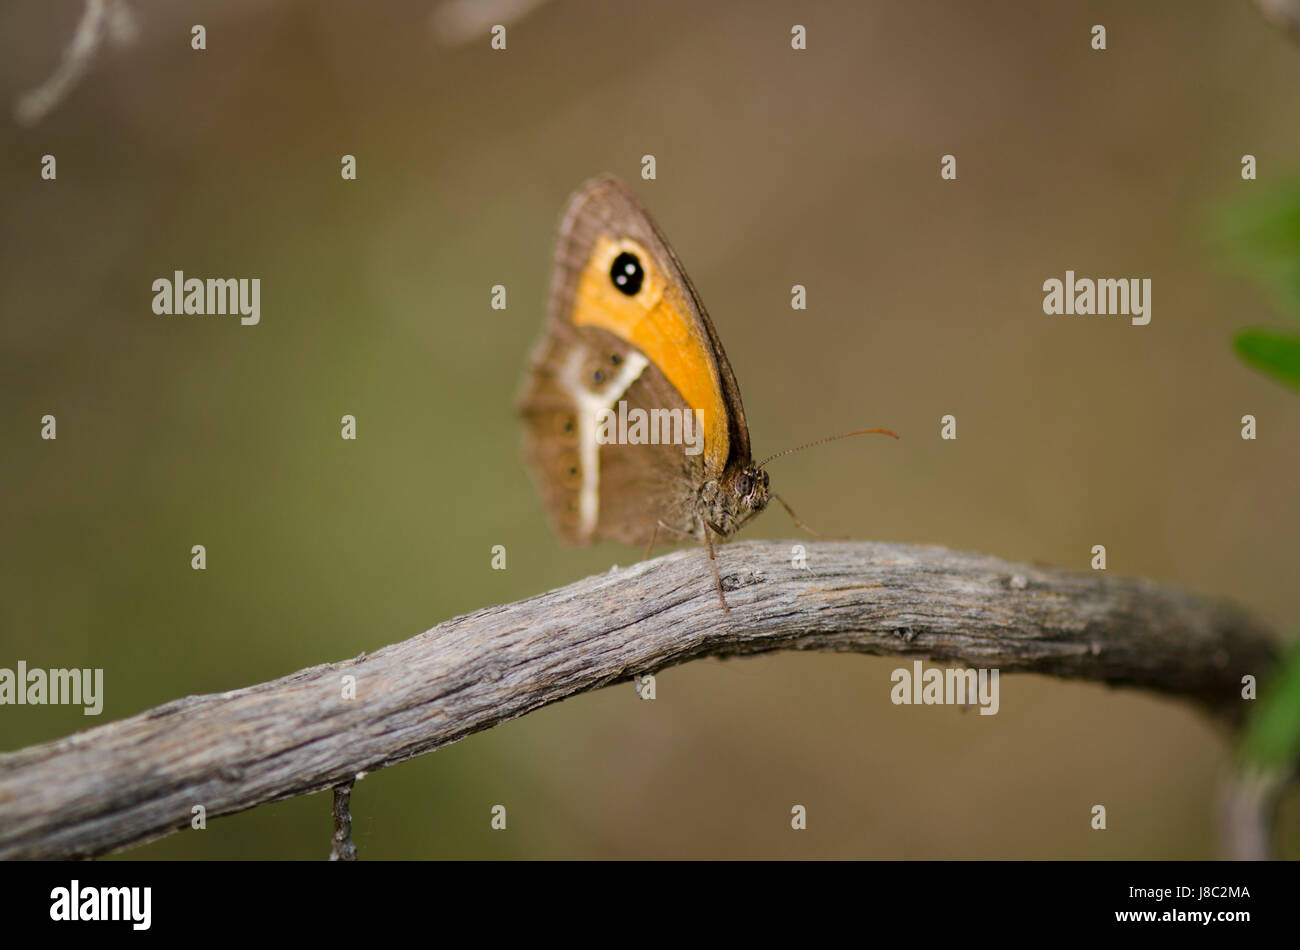 Spanish gatekeeper, Nymphalidae Pyronia bathseba, butterfly, Andalusia, Spain Stock Photo